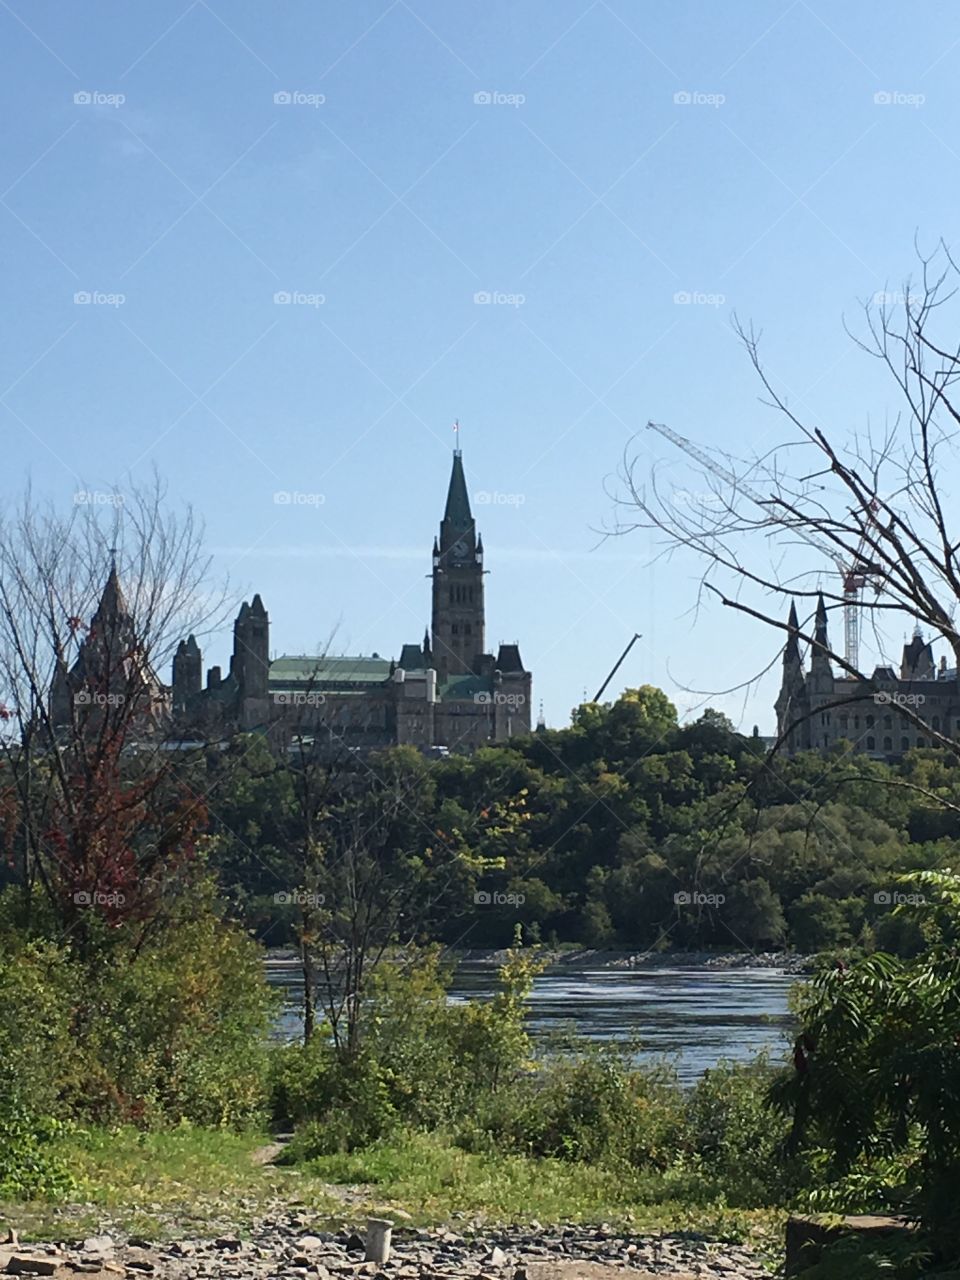 Parliament hill, parliament building Ottawa Canada 